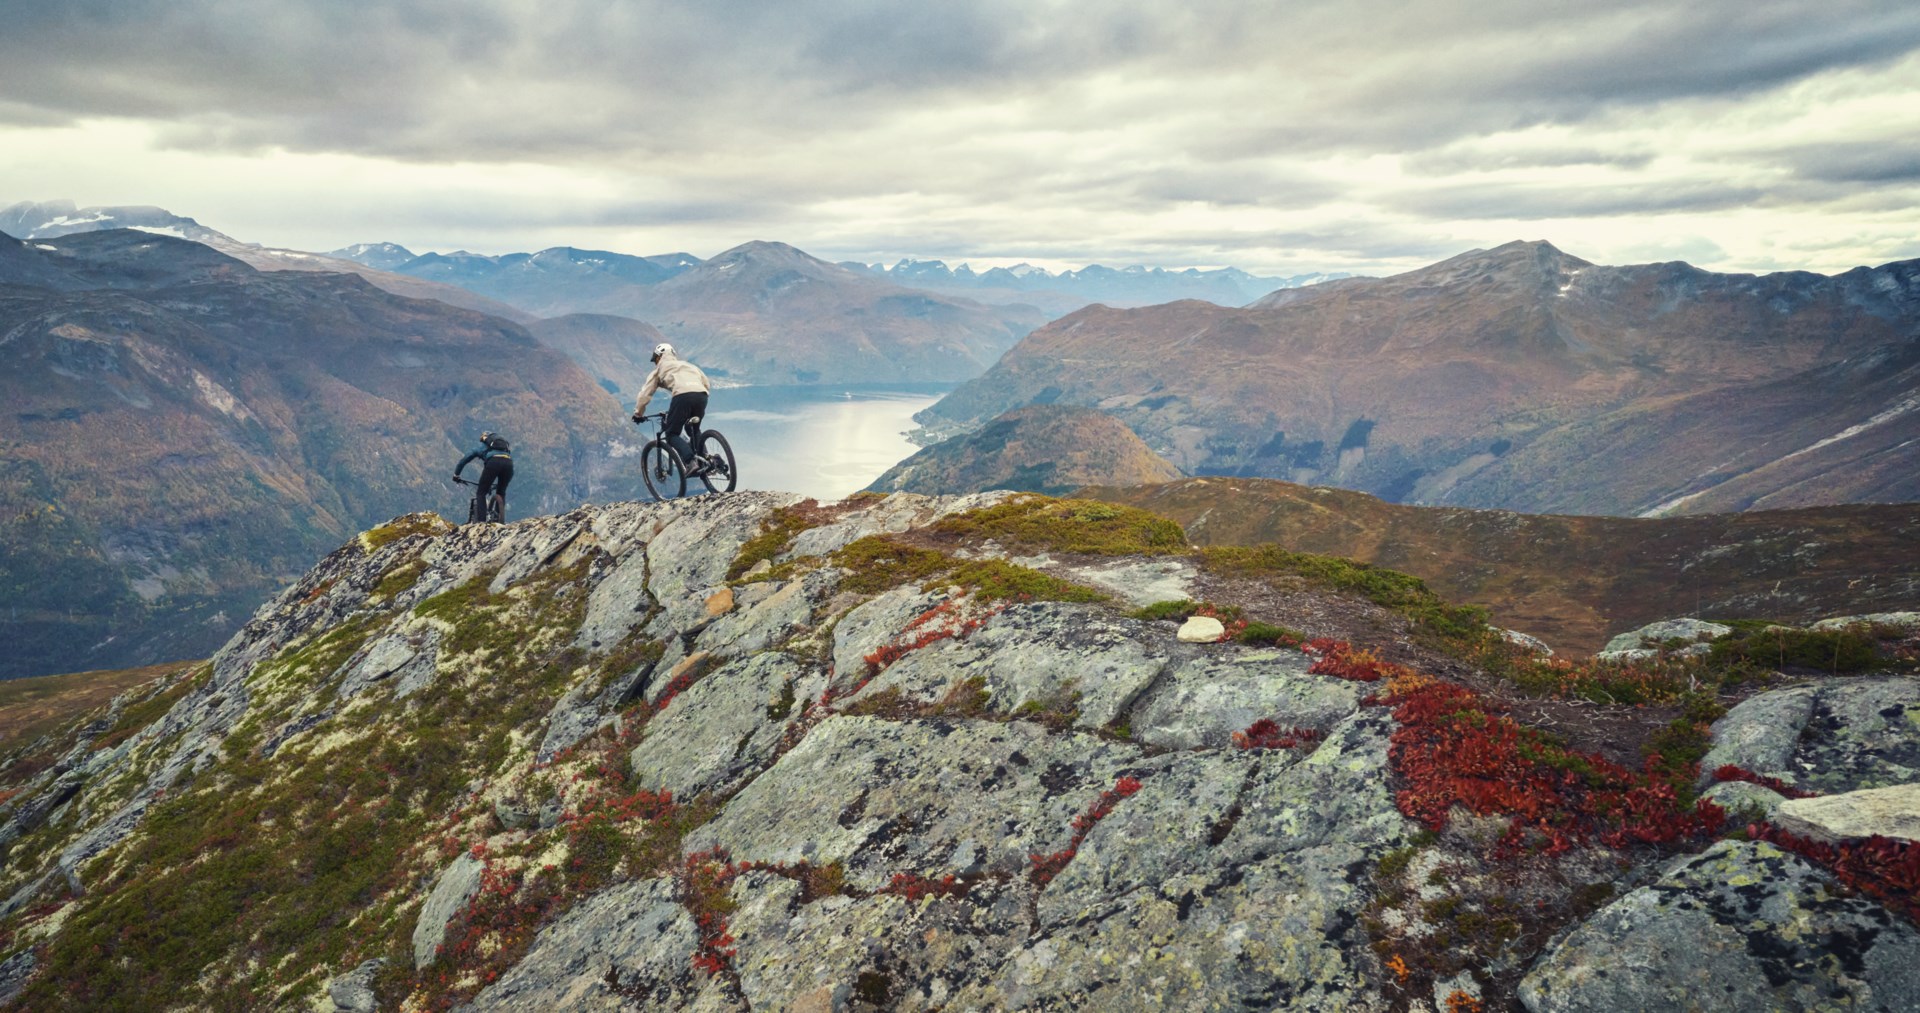 Two people mountain biking on top of a rocky mountain